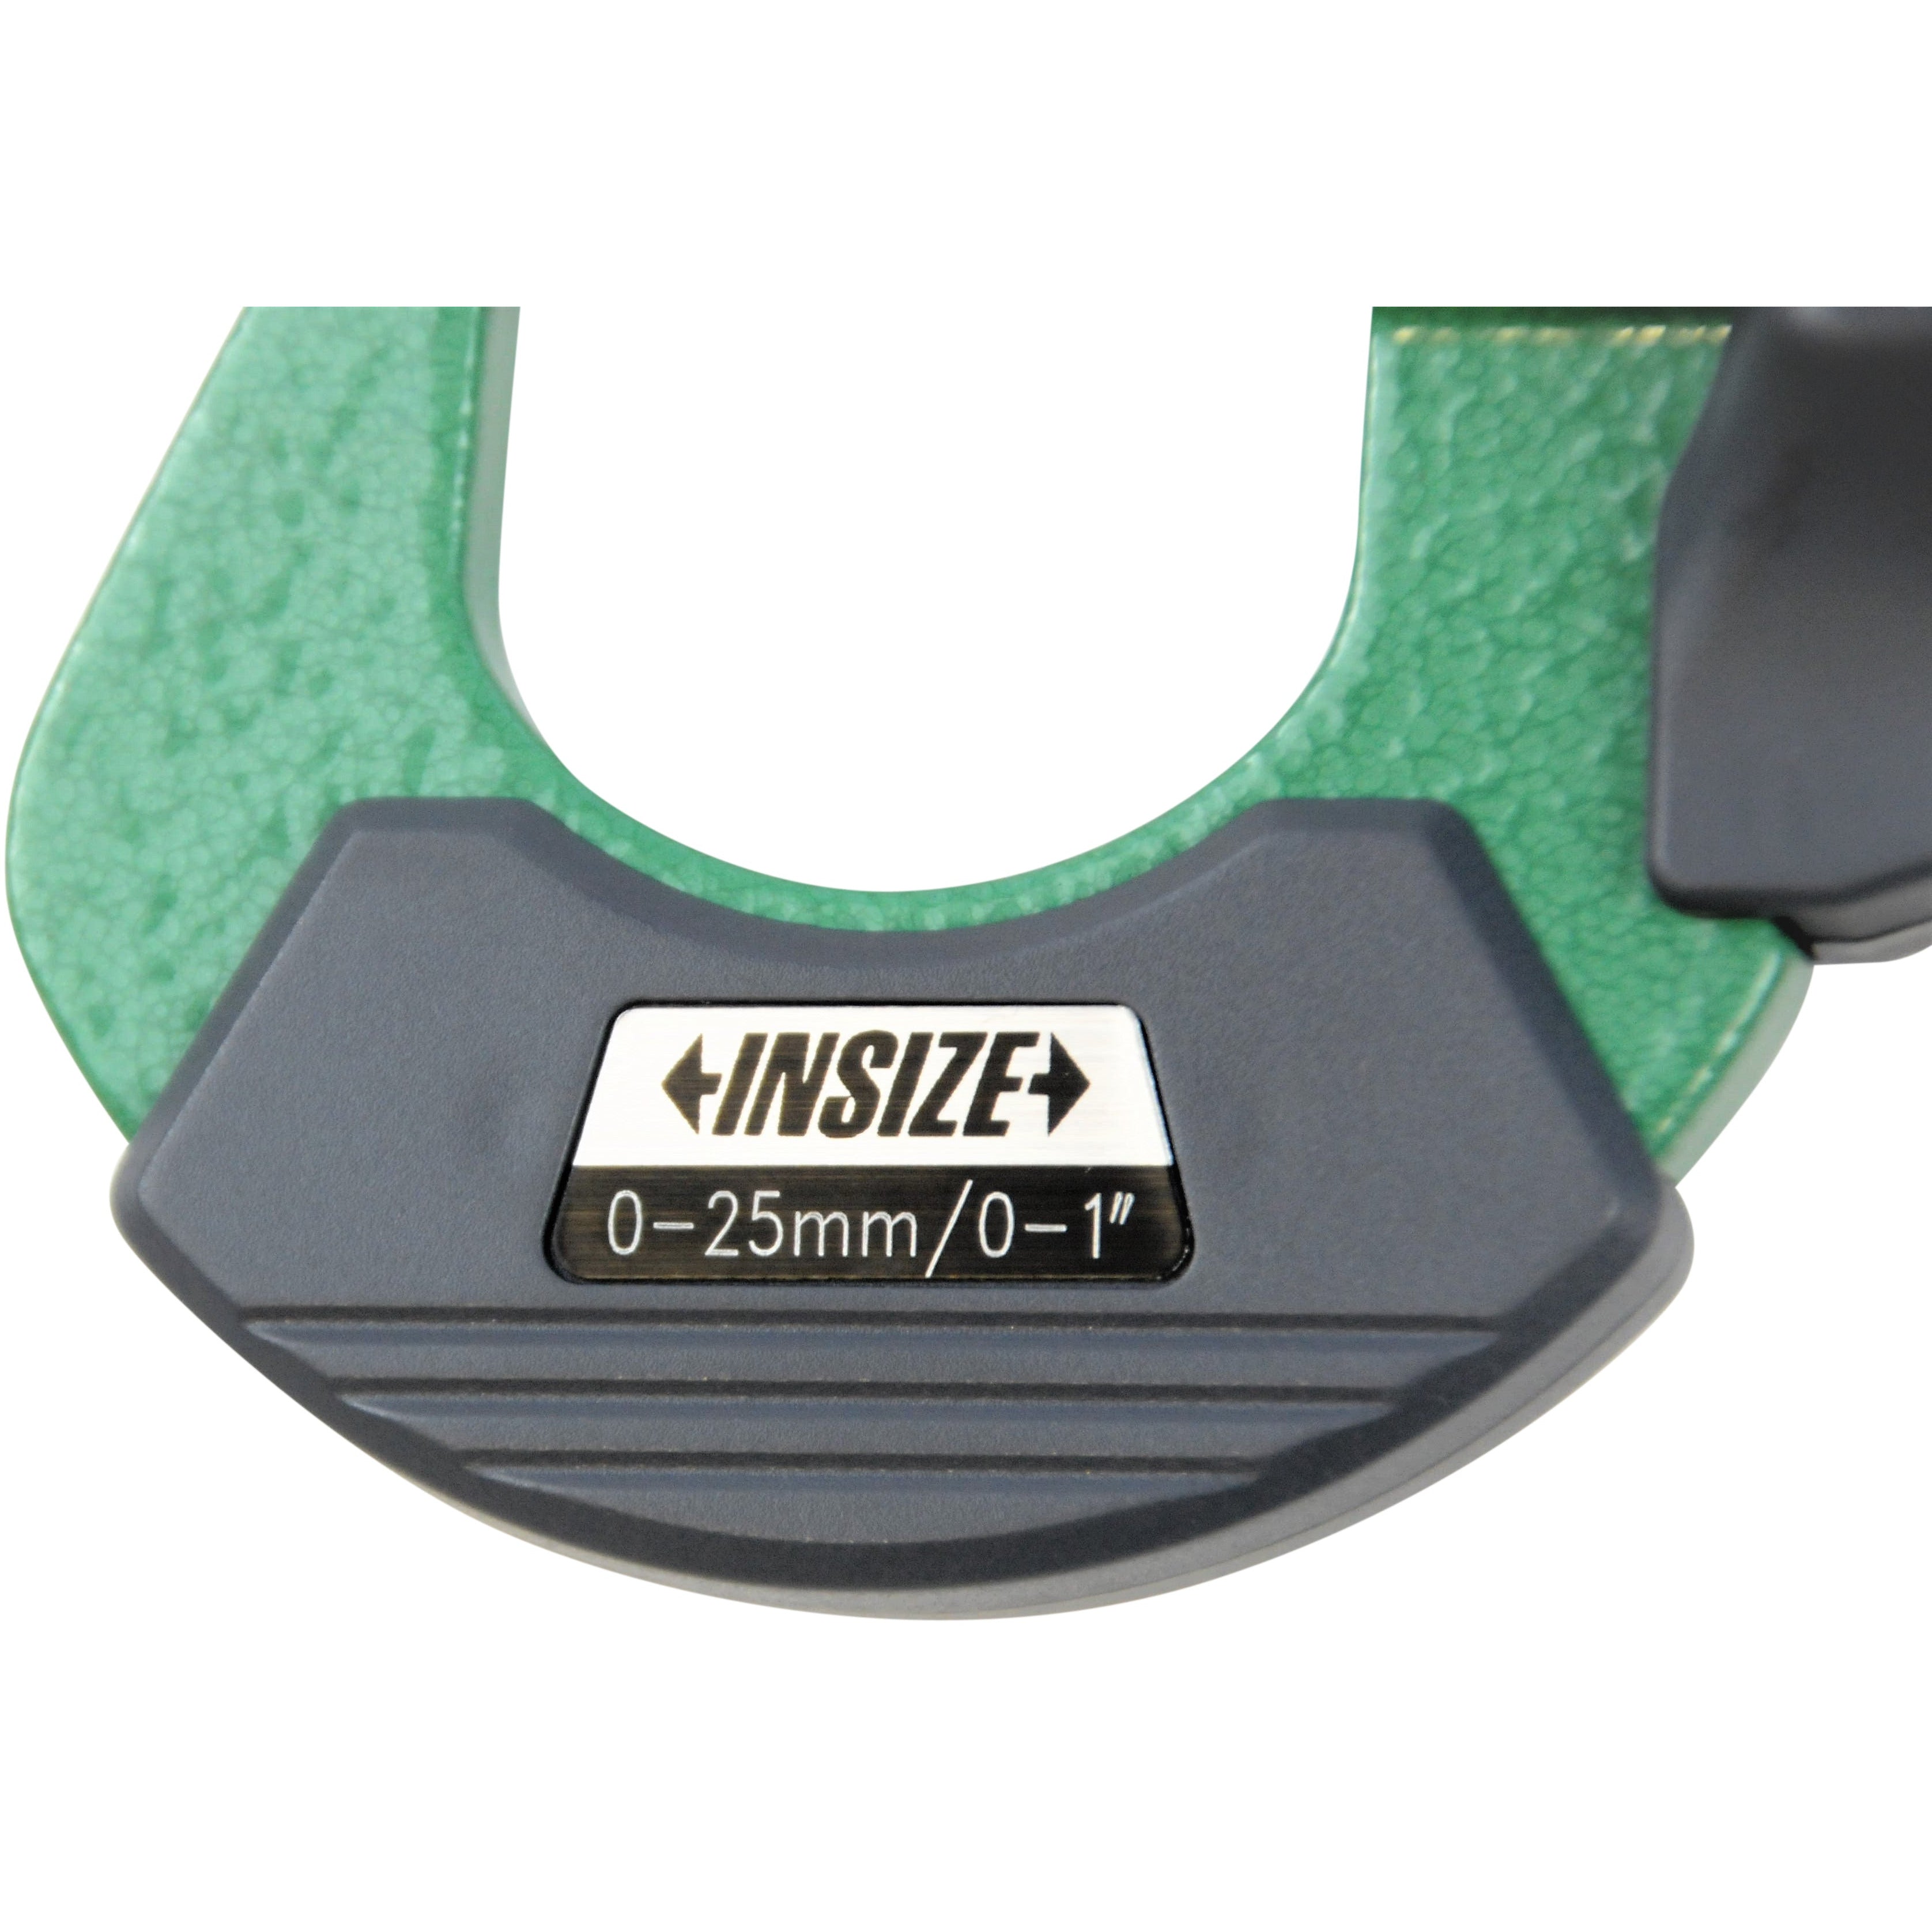 Insize Digital Outside Micrometer 0-25 MM / 0-1" Range Series 3109-25A